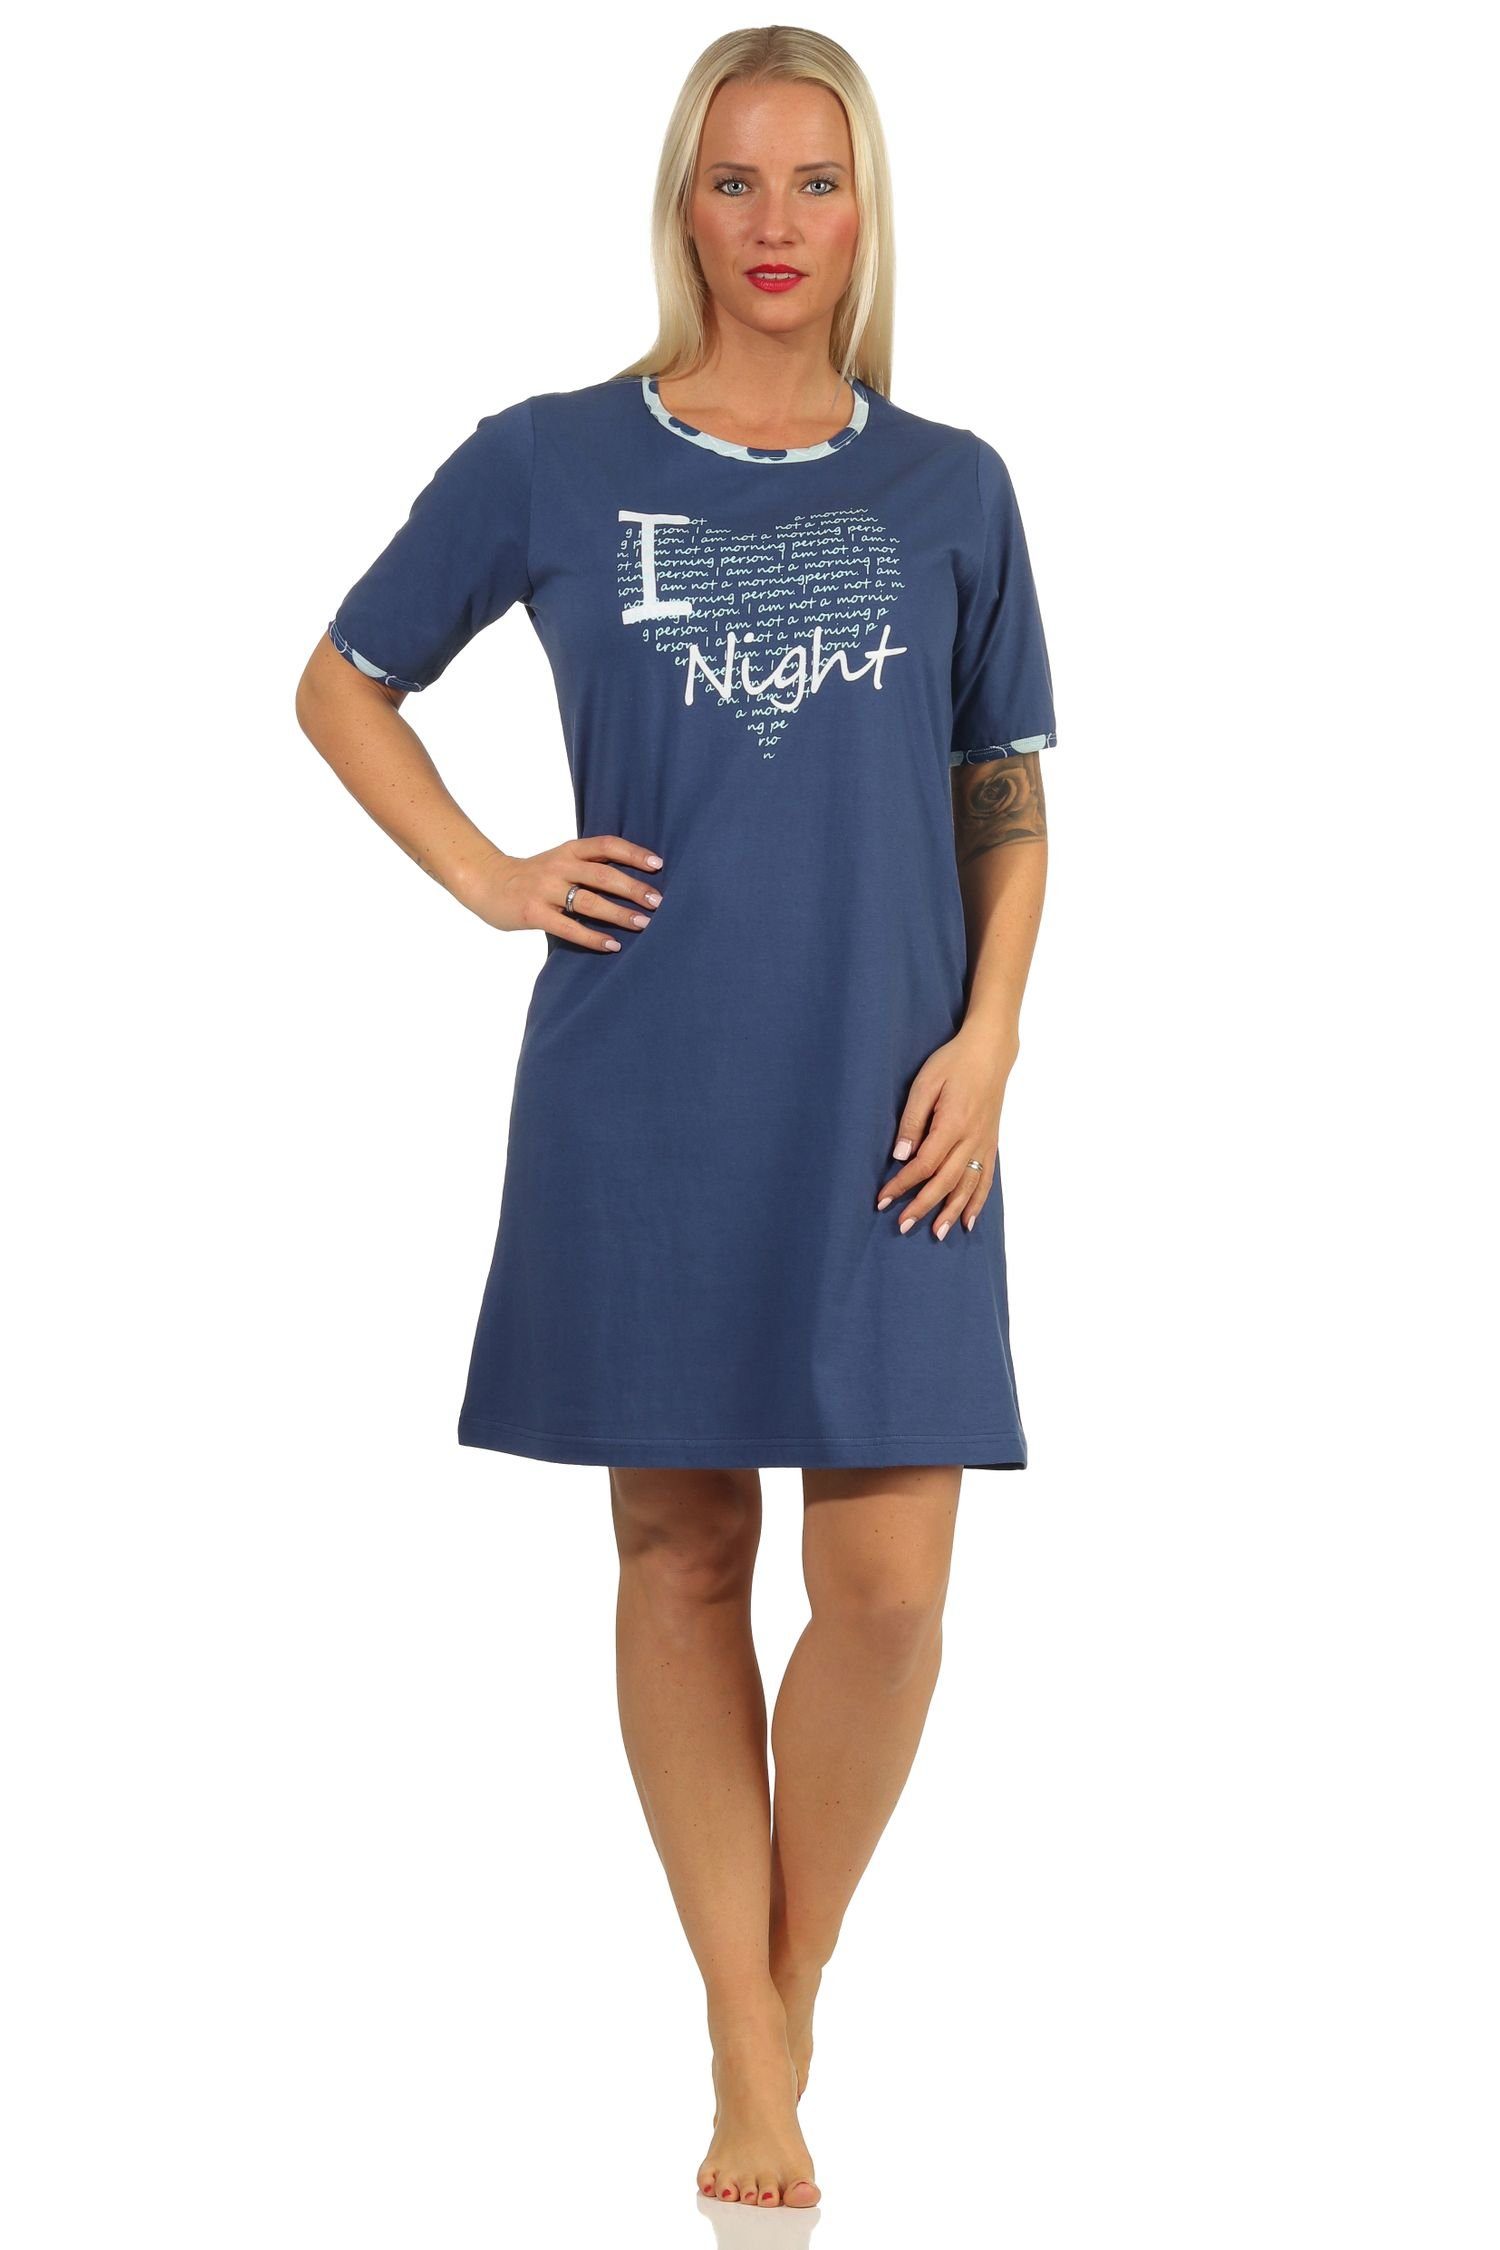 RELAX by Normann Nachthemd Cooles Damen kurzarm Nachthemd Bigshirt mit Herz Motiv - 122 10 603 navy